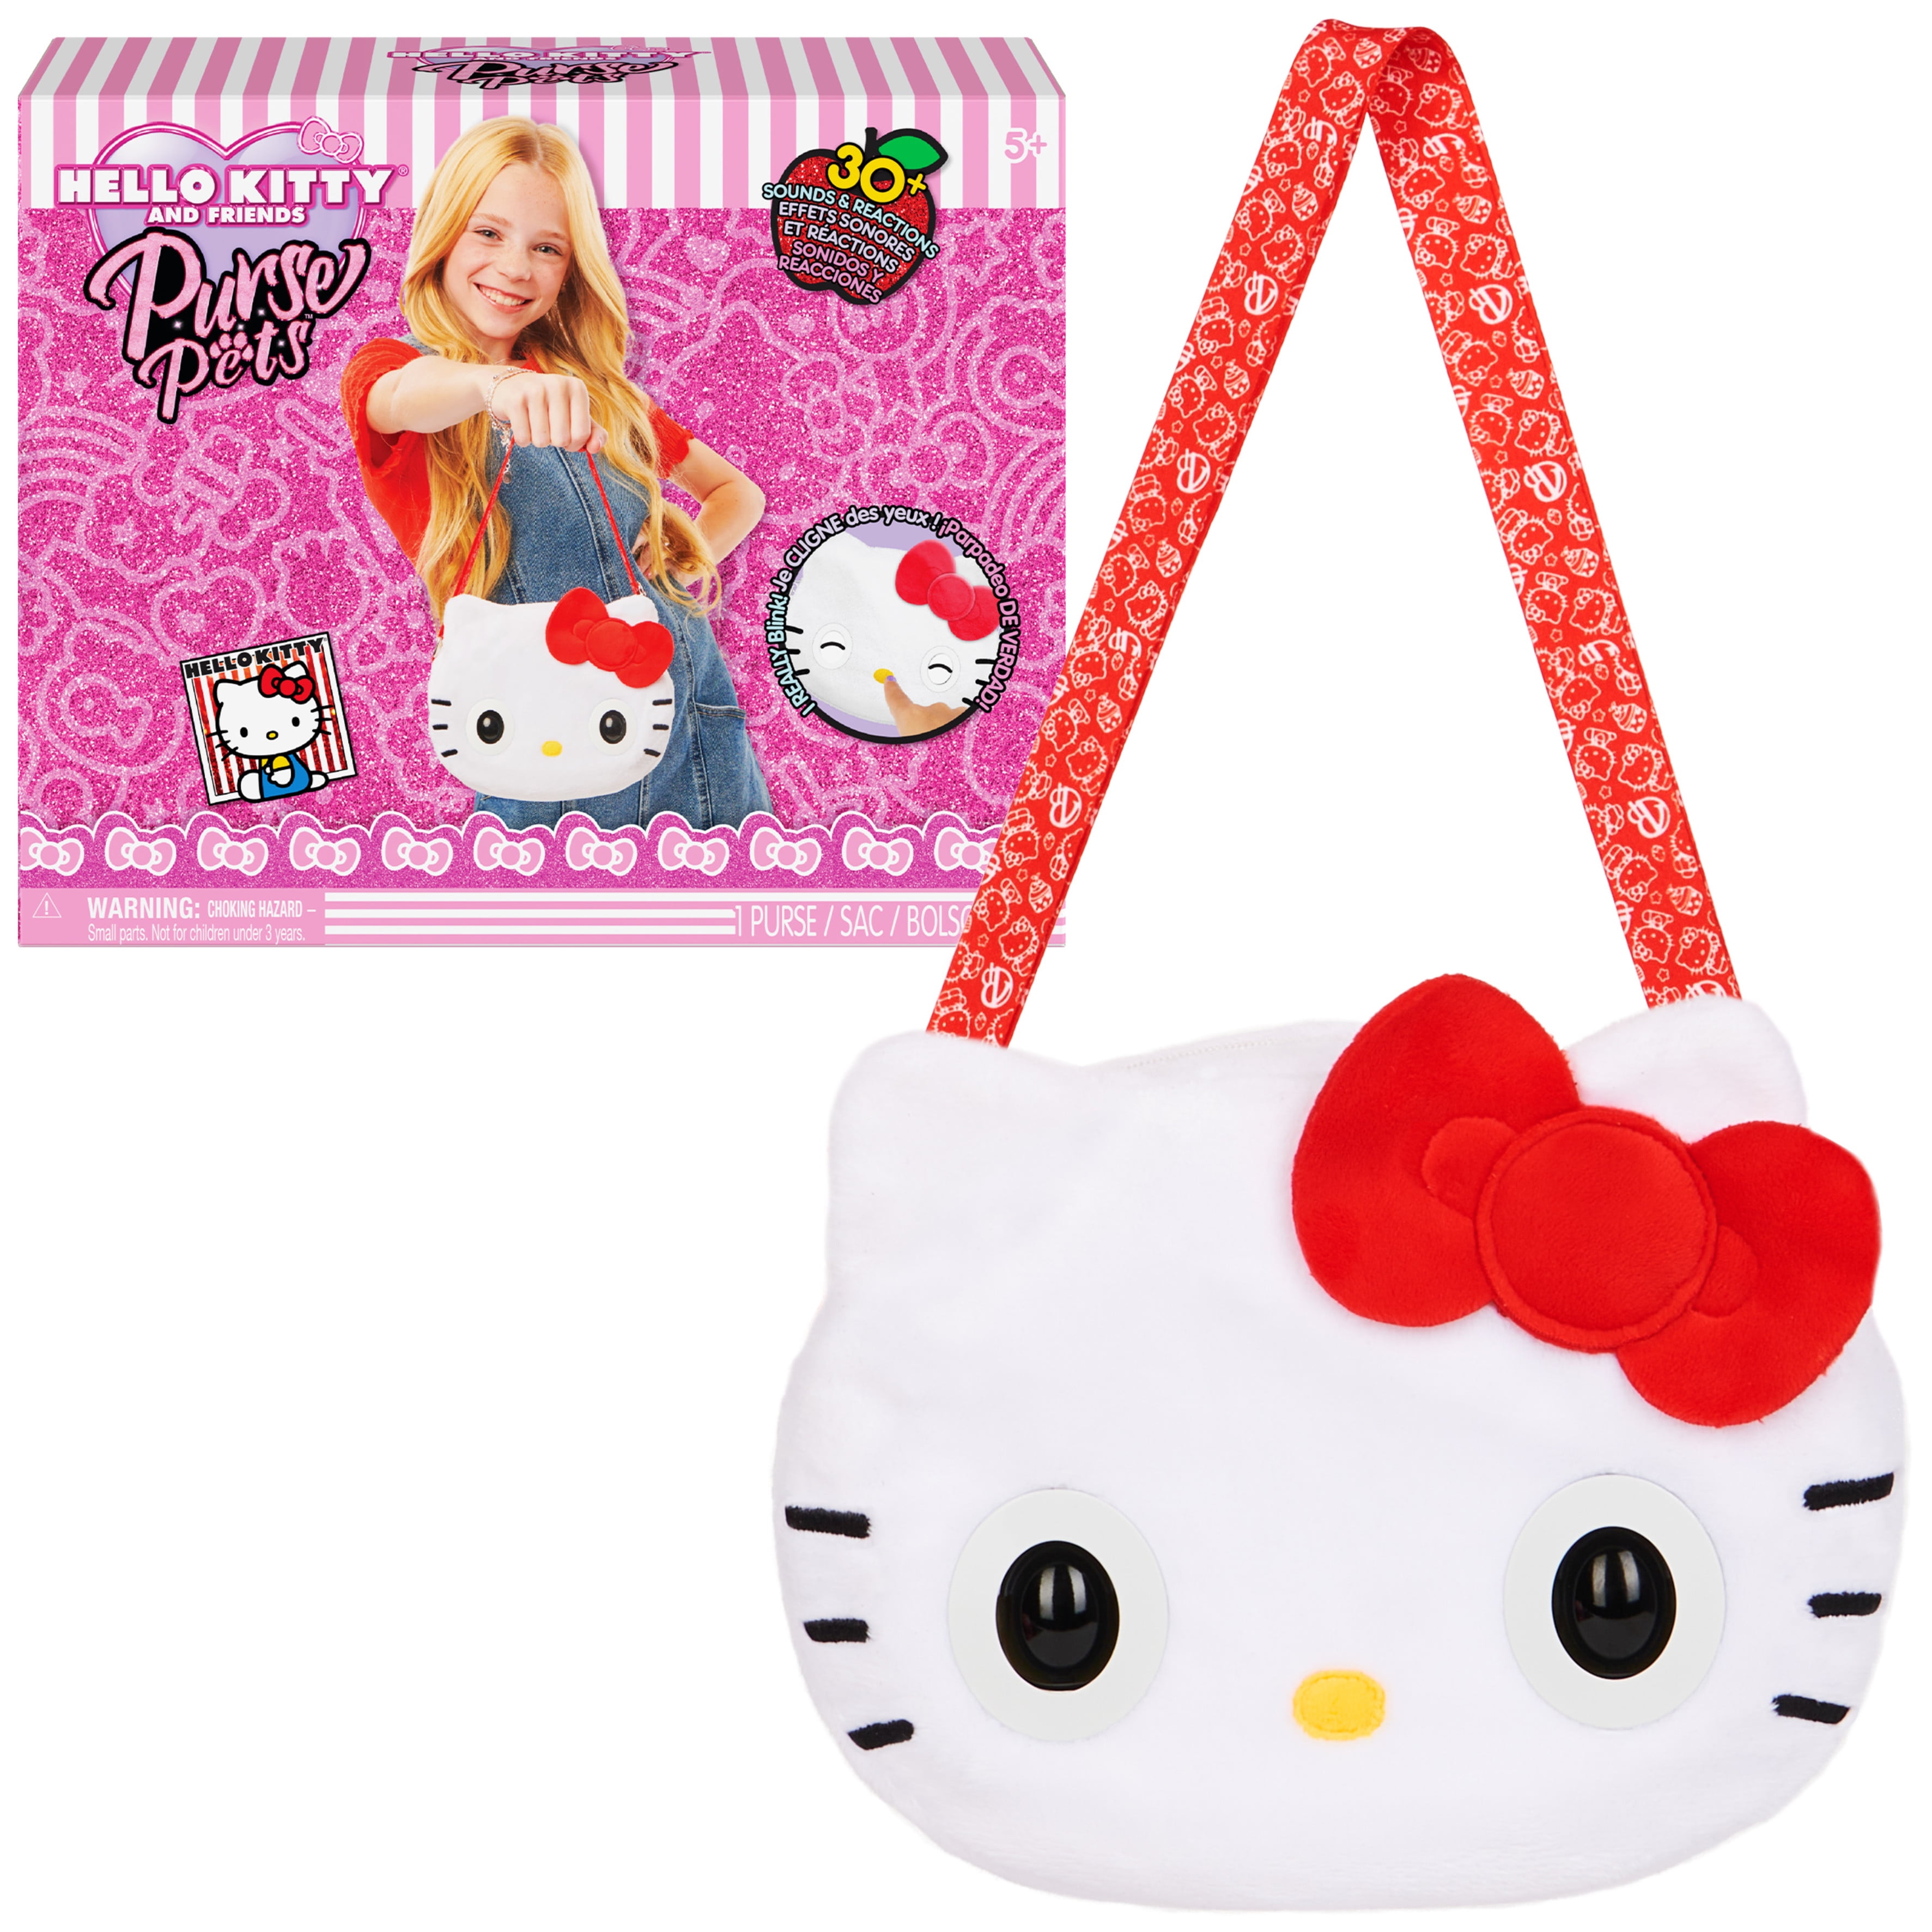 Adorable Sanrio Hello Kitty Chain Strap Pink Handbag